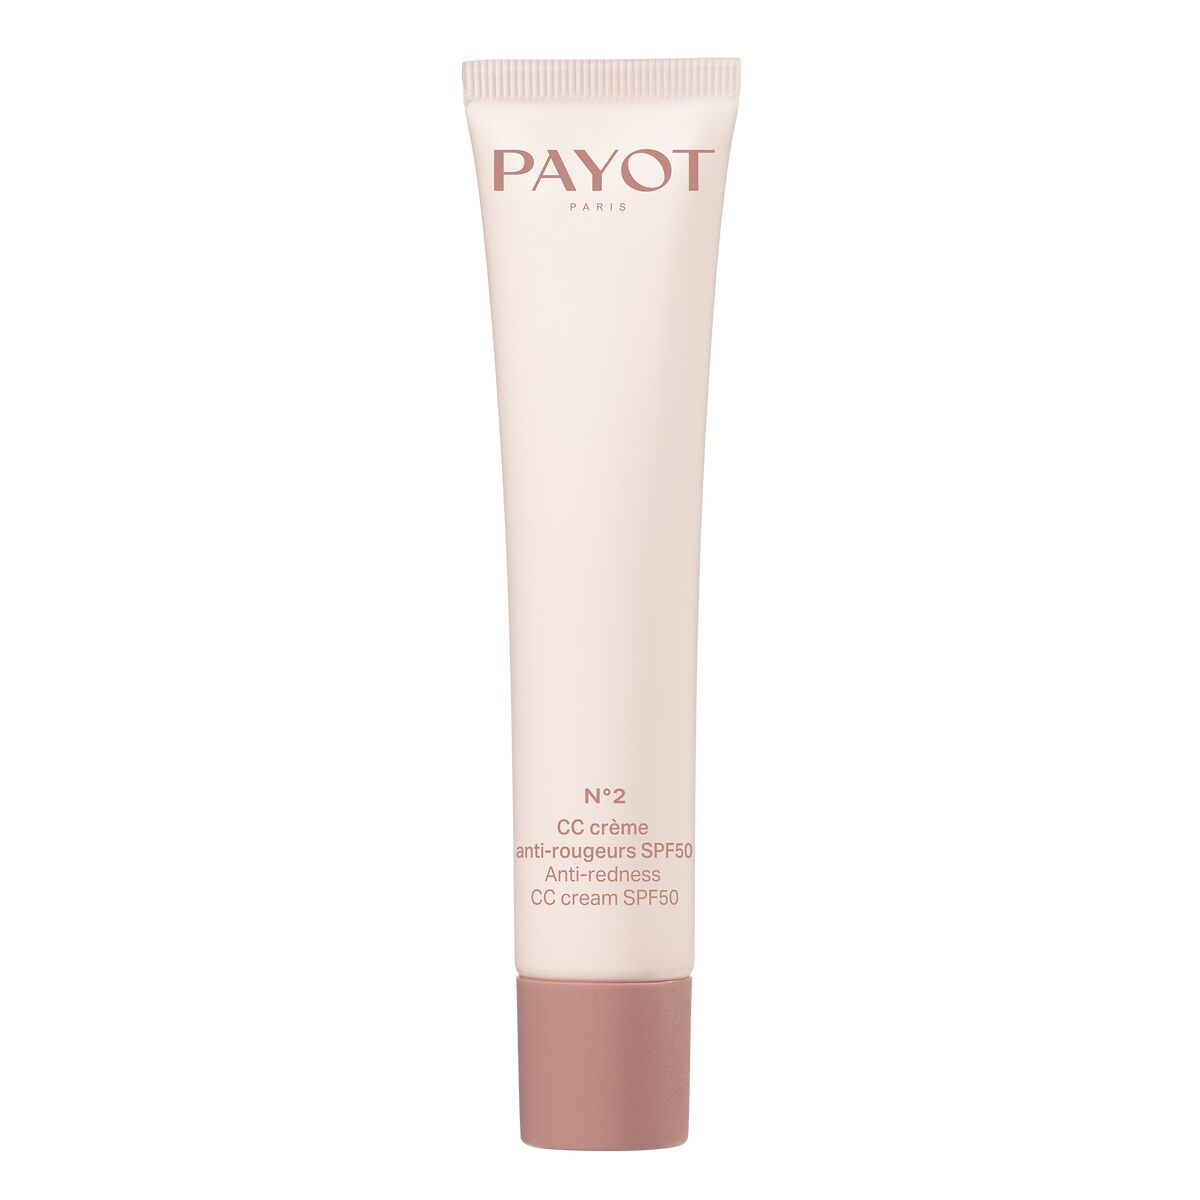 Anti-Reddening Cream Payot Nº2 Spf 50 40 ml | Payot | Aylal Beauty